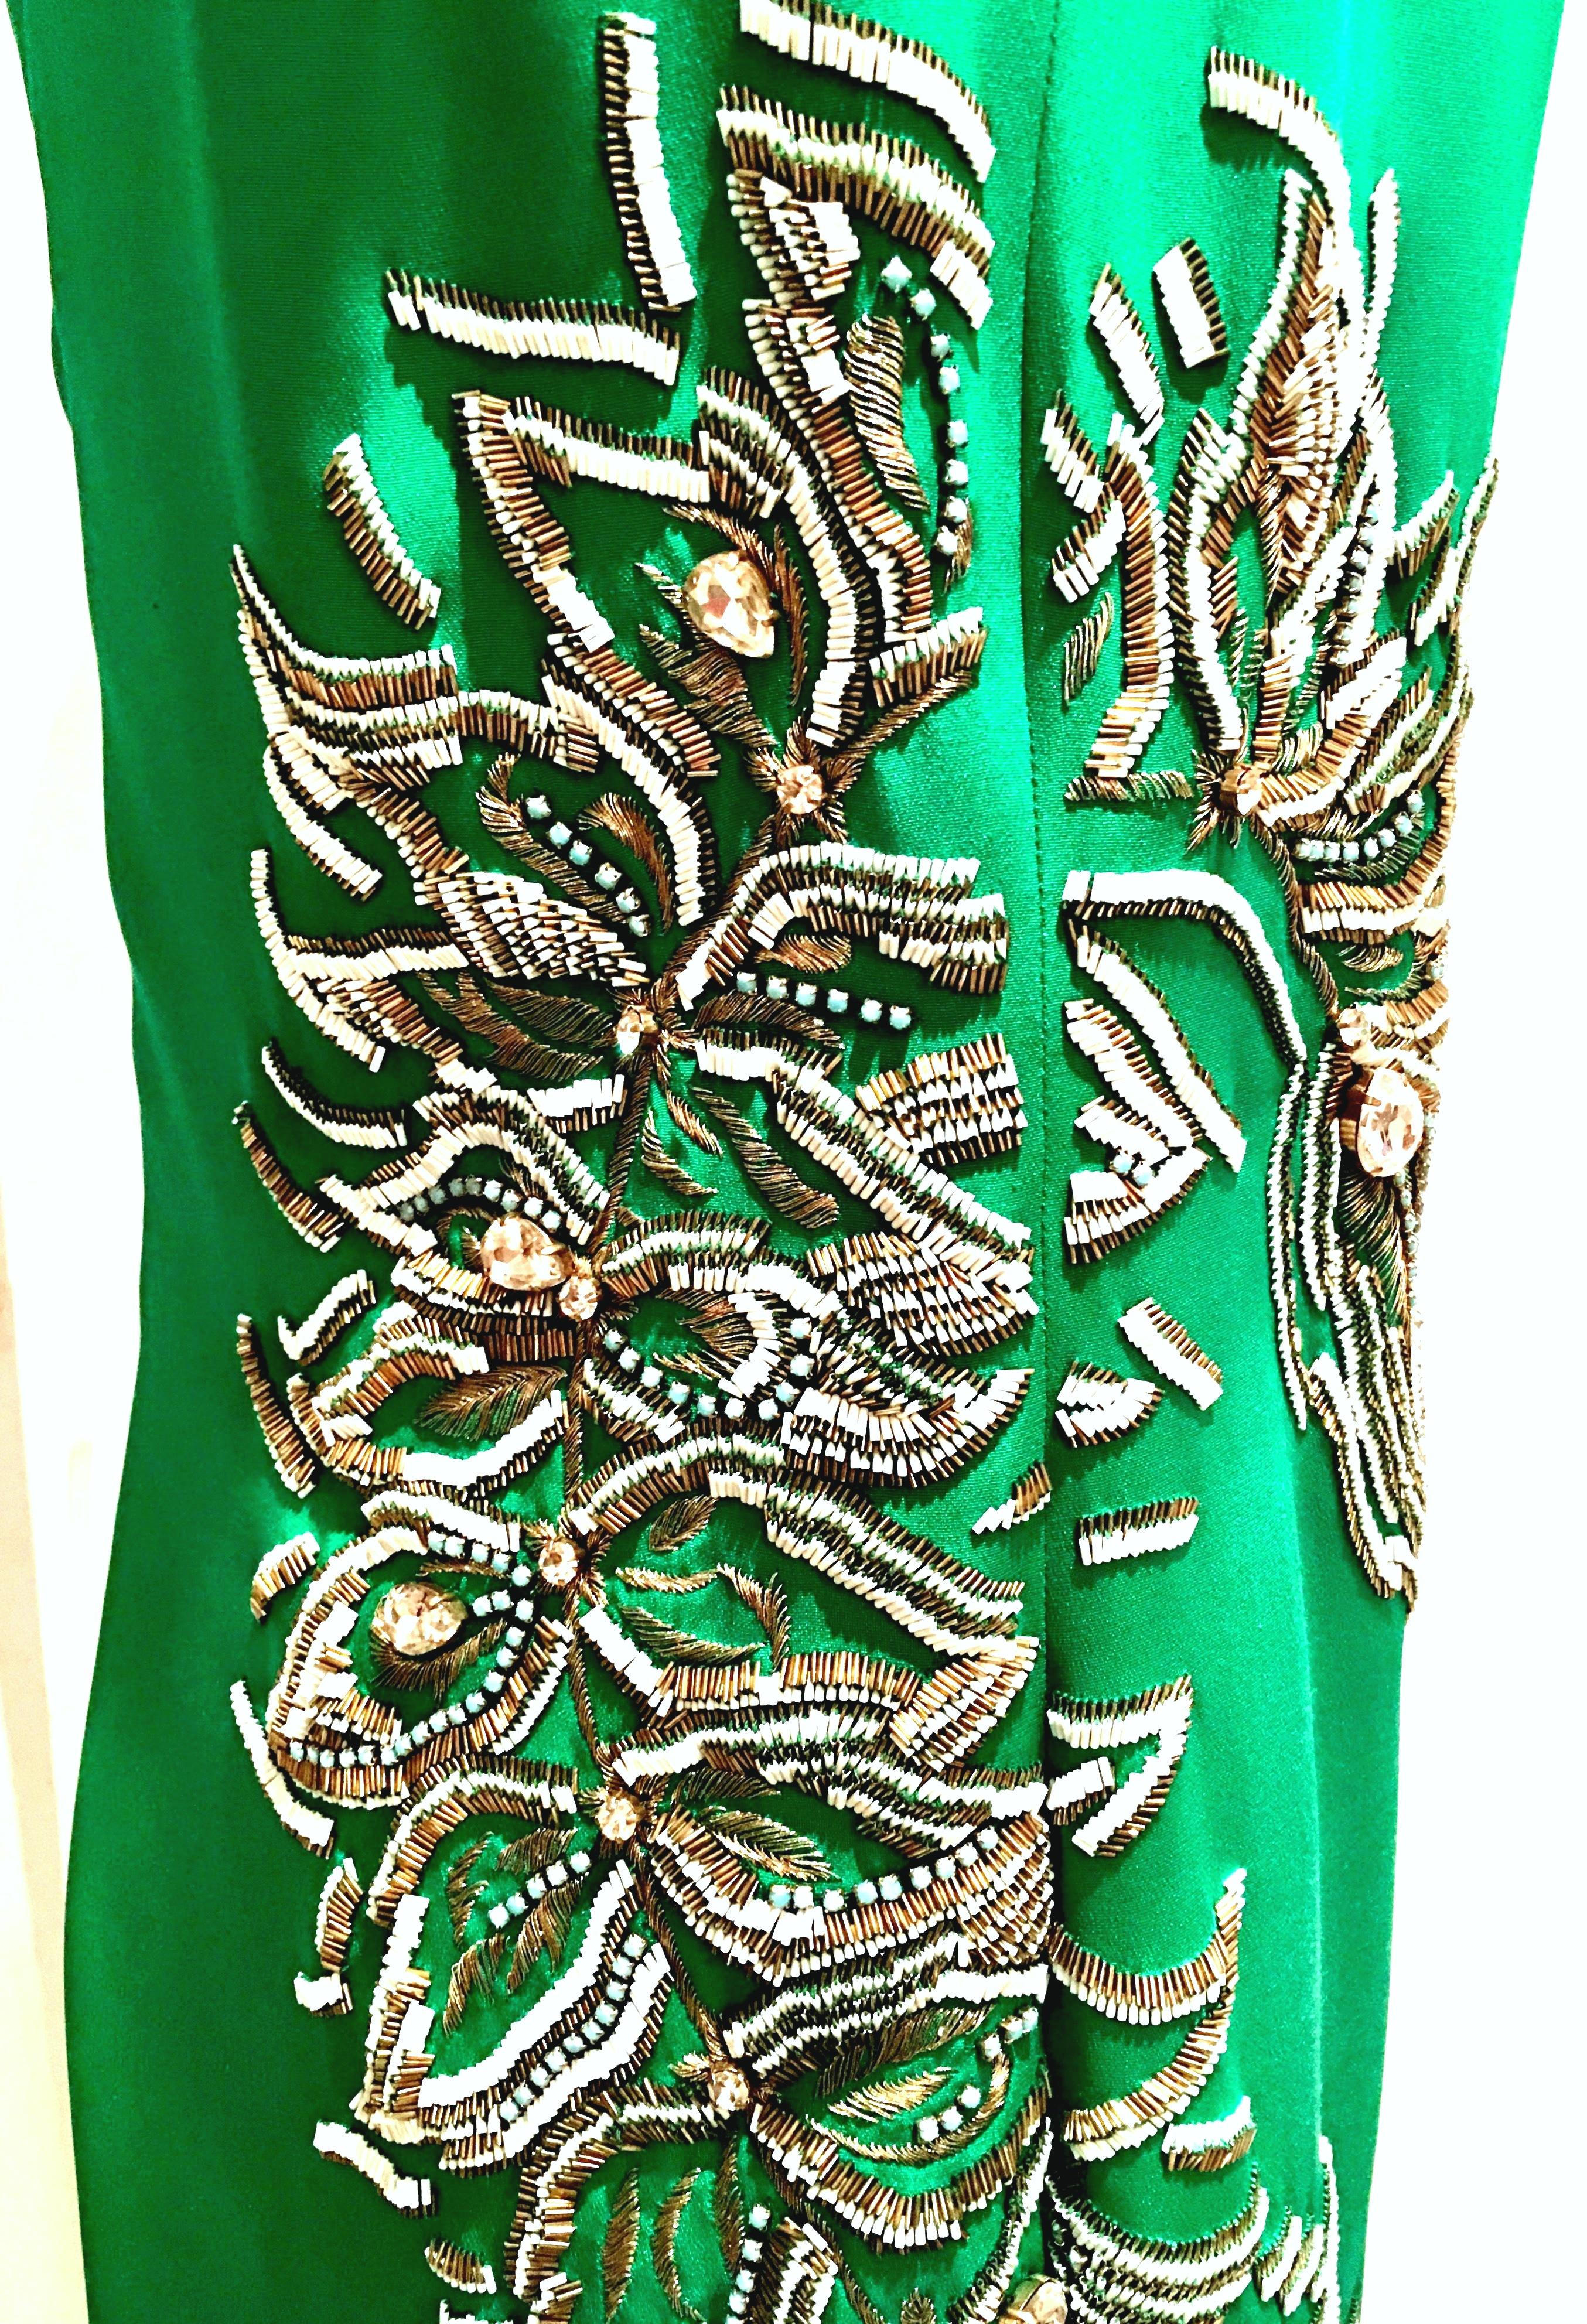 New 2013 Thakoon Runway Hand Beaded Italian Silk Cocktail Dress Size-6 3